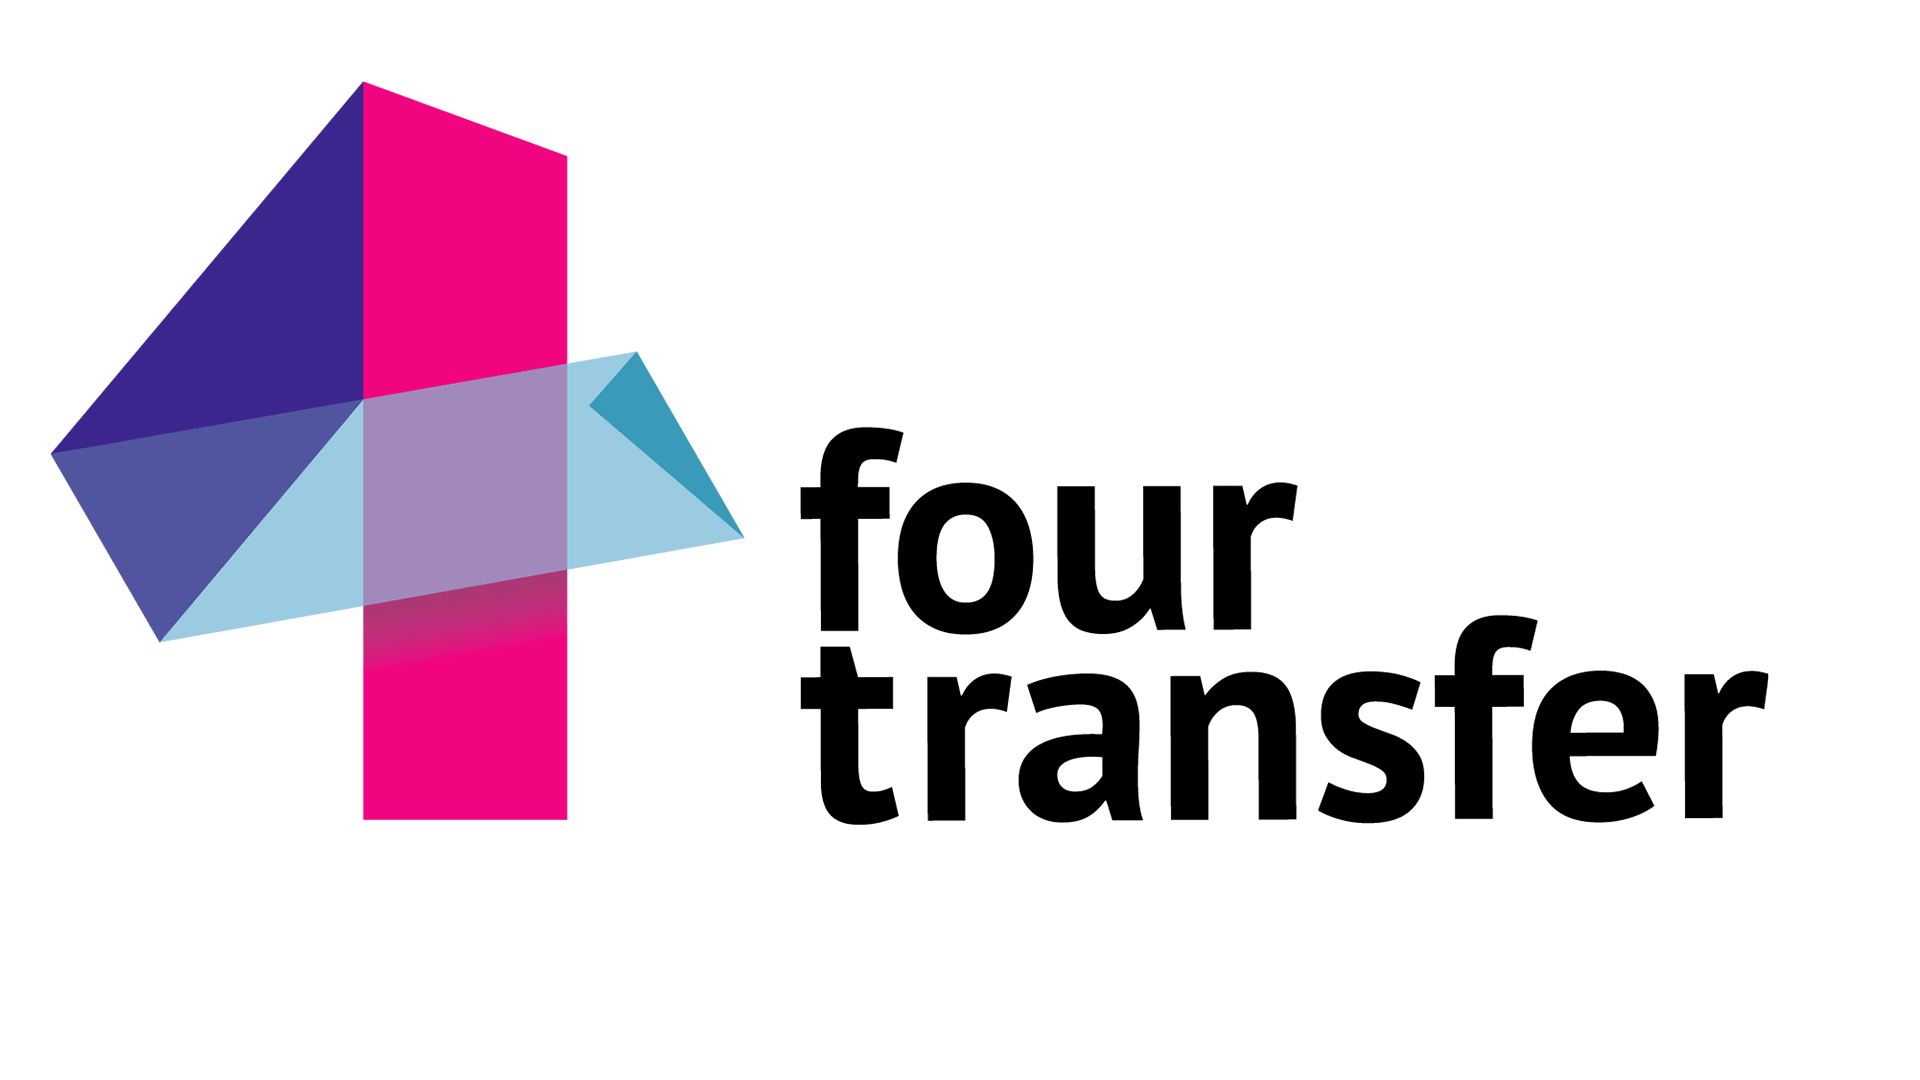 4transfer